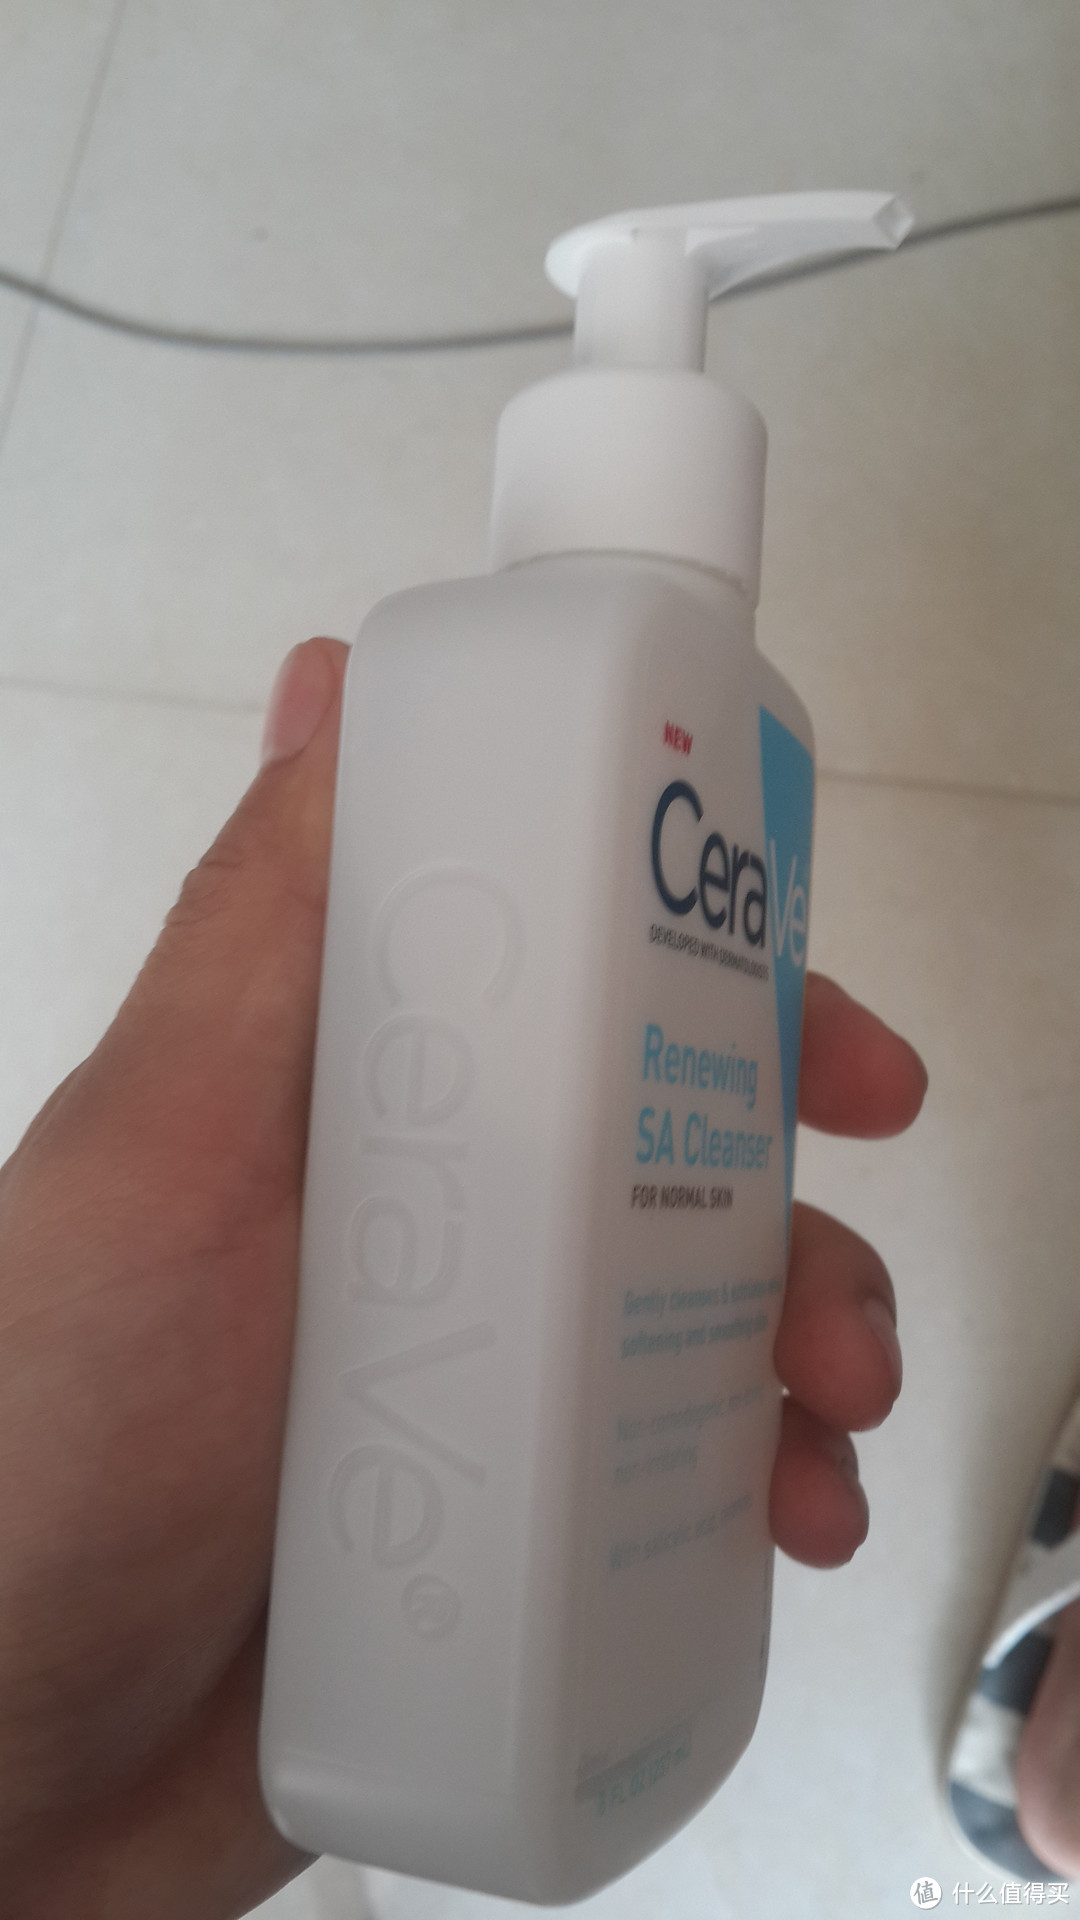 CeraVe新款专为痘肌设计的洗面奶 Renewing SA Cleanser